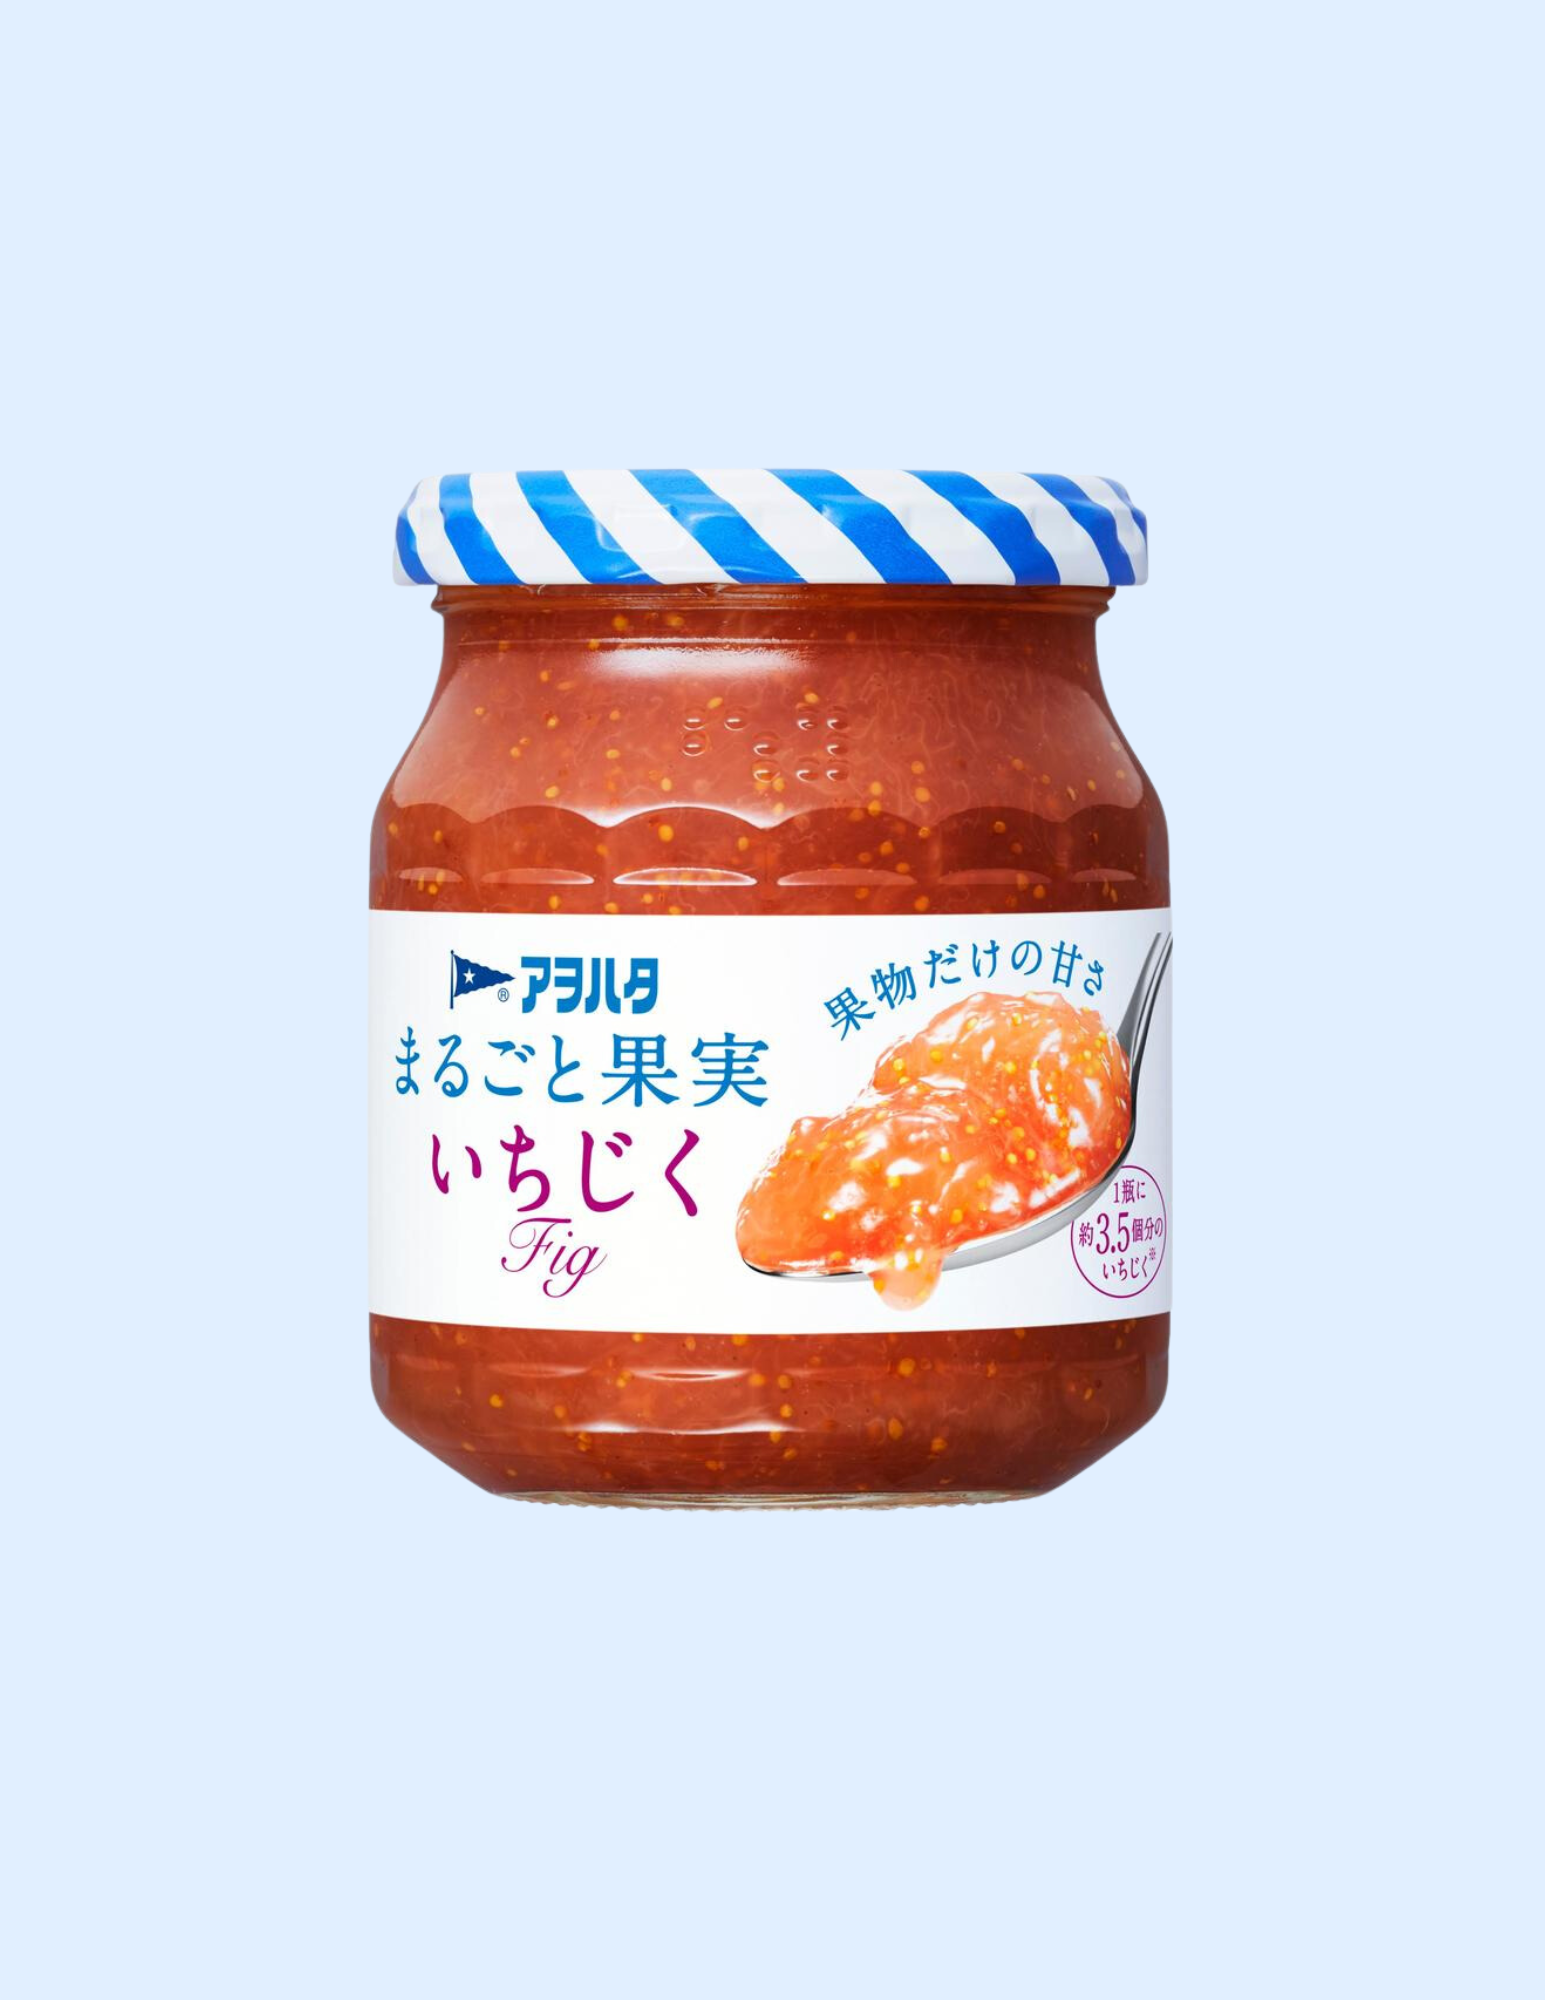 Aohata Zero Added Sugar Fig Jam